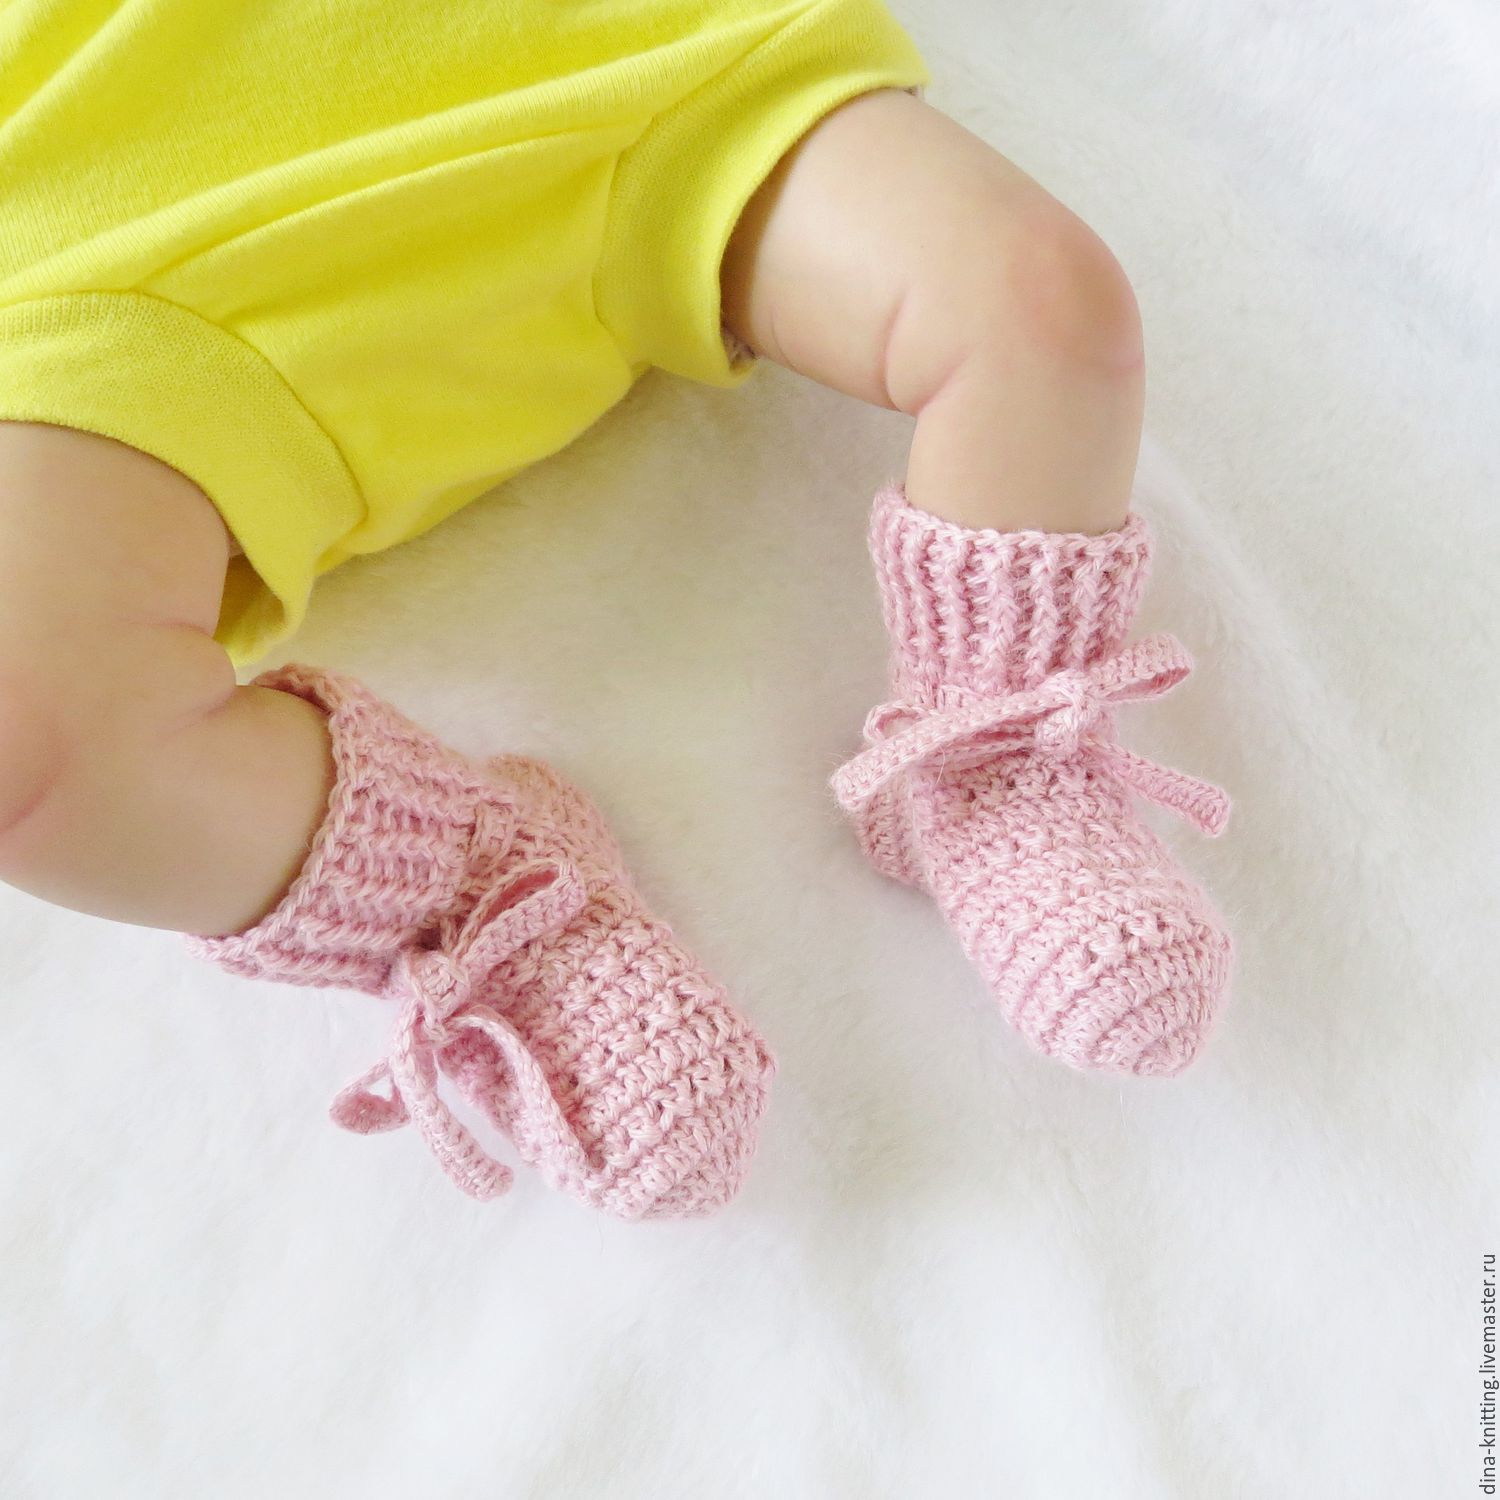 Носочки для новорожденных 0. Носочки для новорожденных спицами. Носочки трикотажные для новорожденных. Вязаные носочки для новорожденного. Вязаные носочки для младенцев.